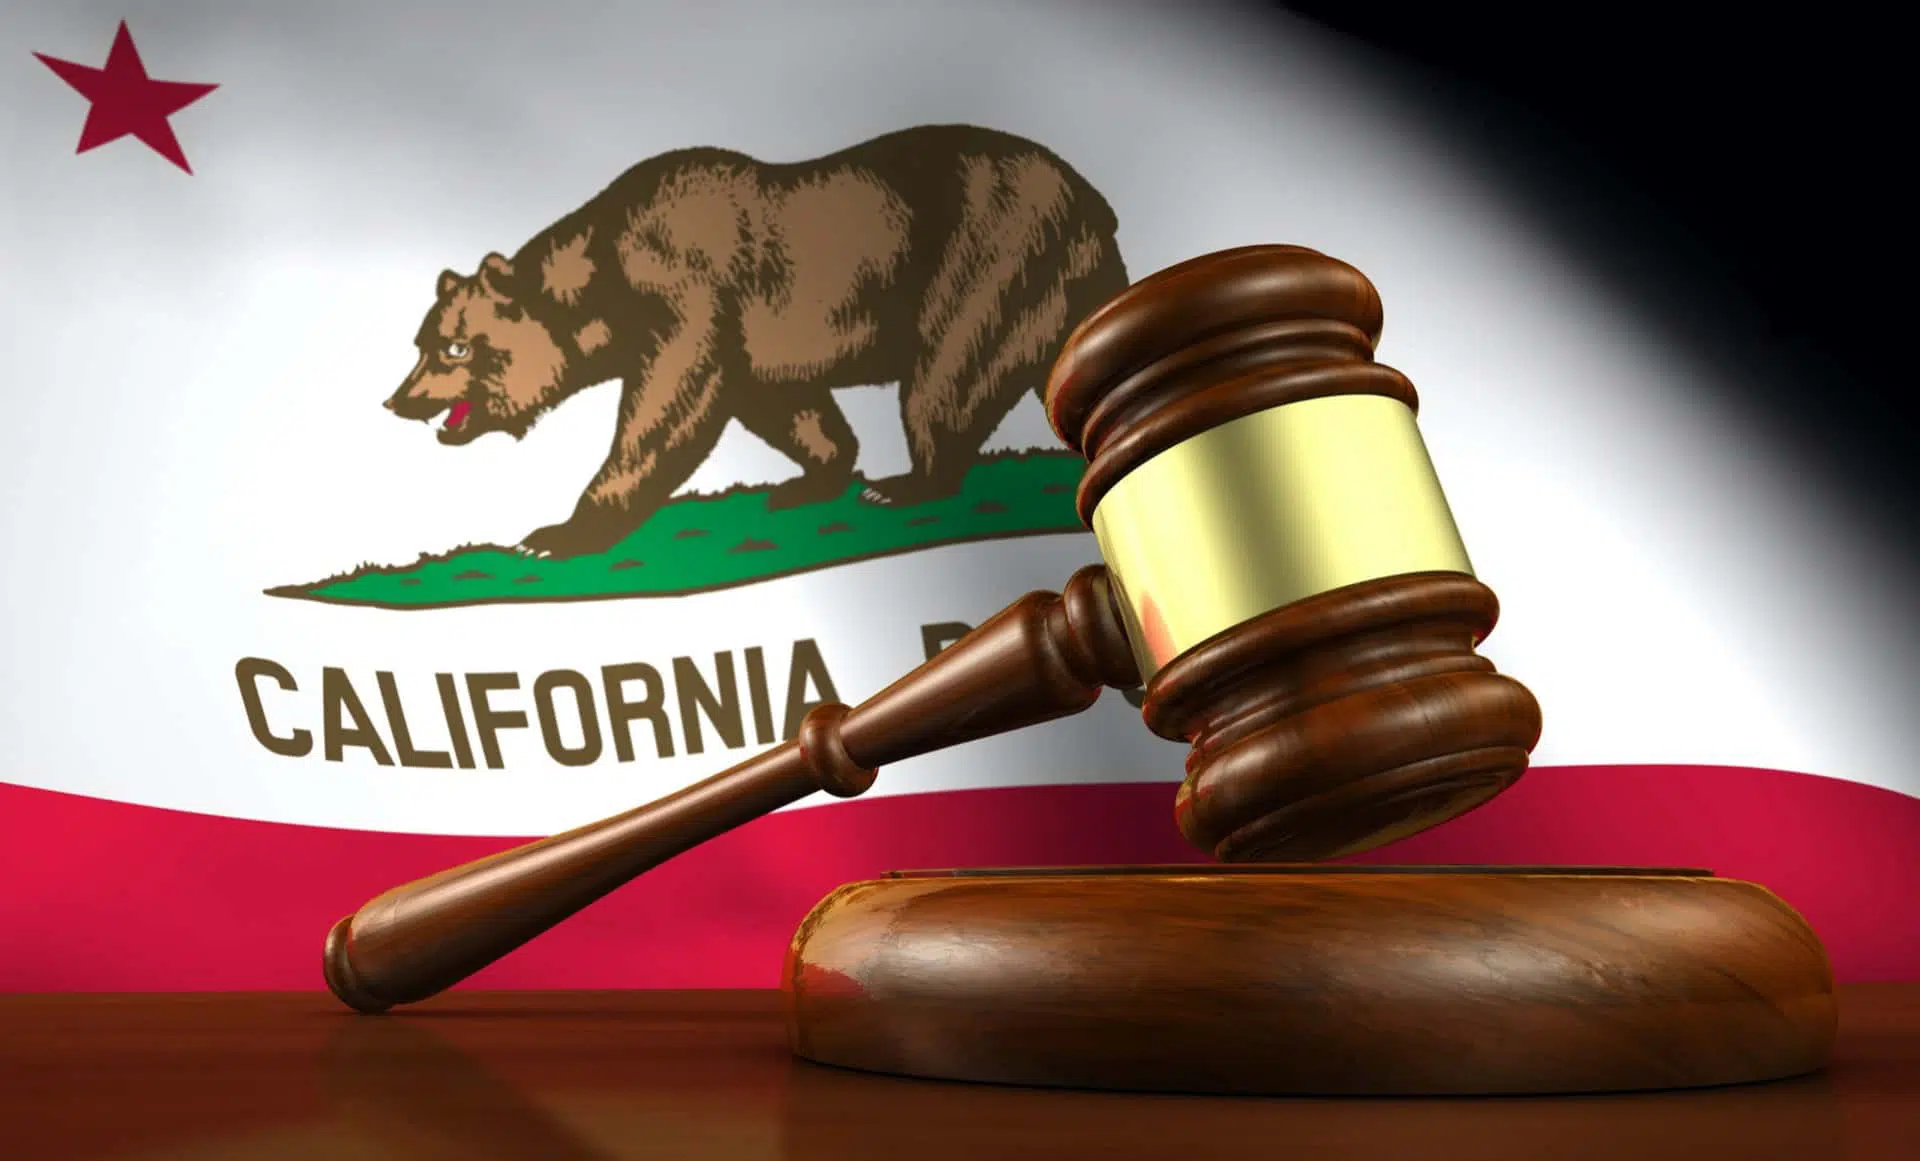 Bears and legal stuff in California